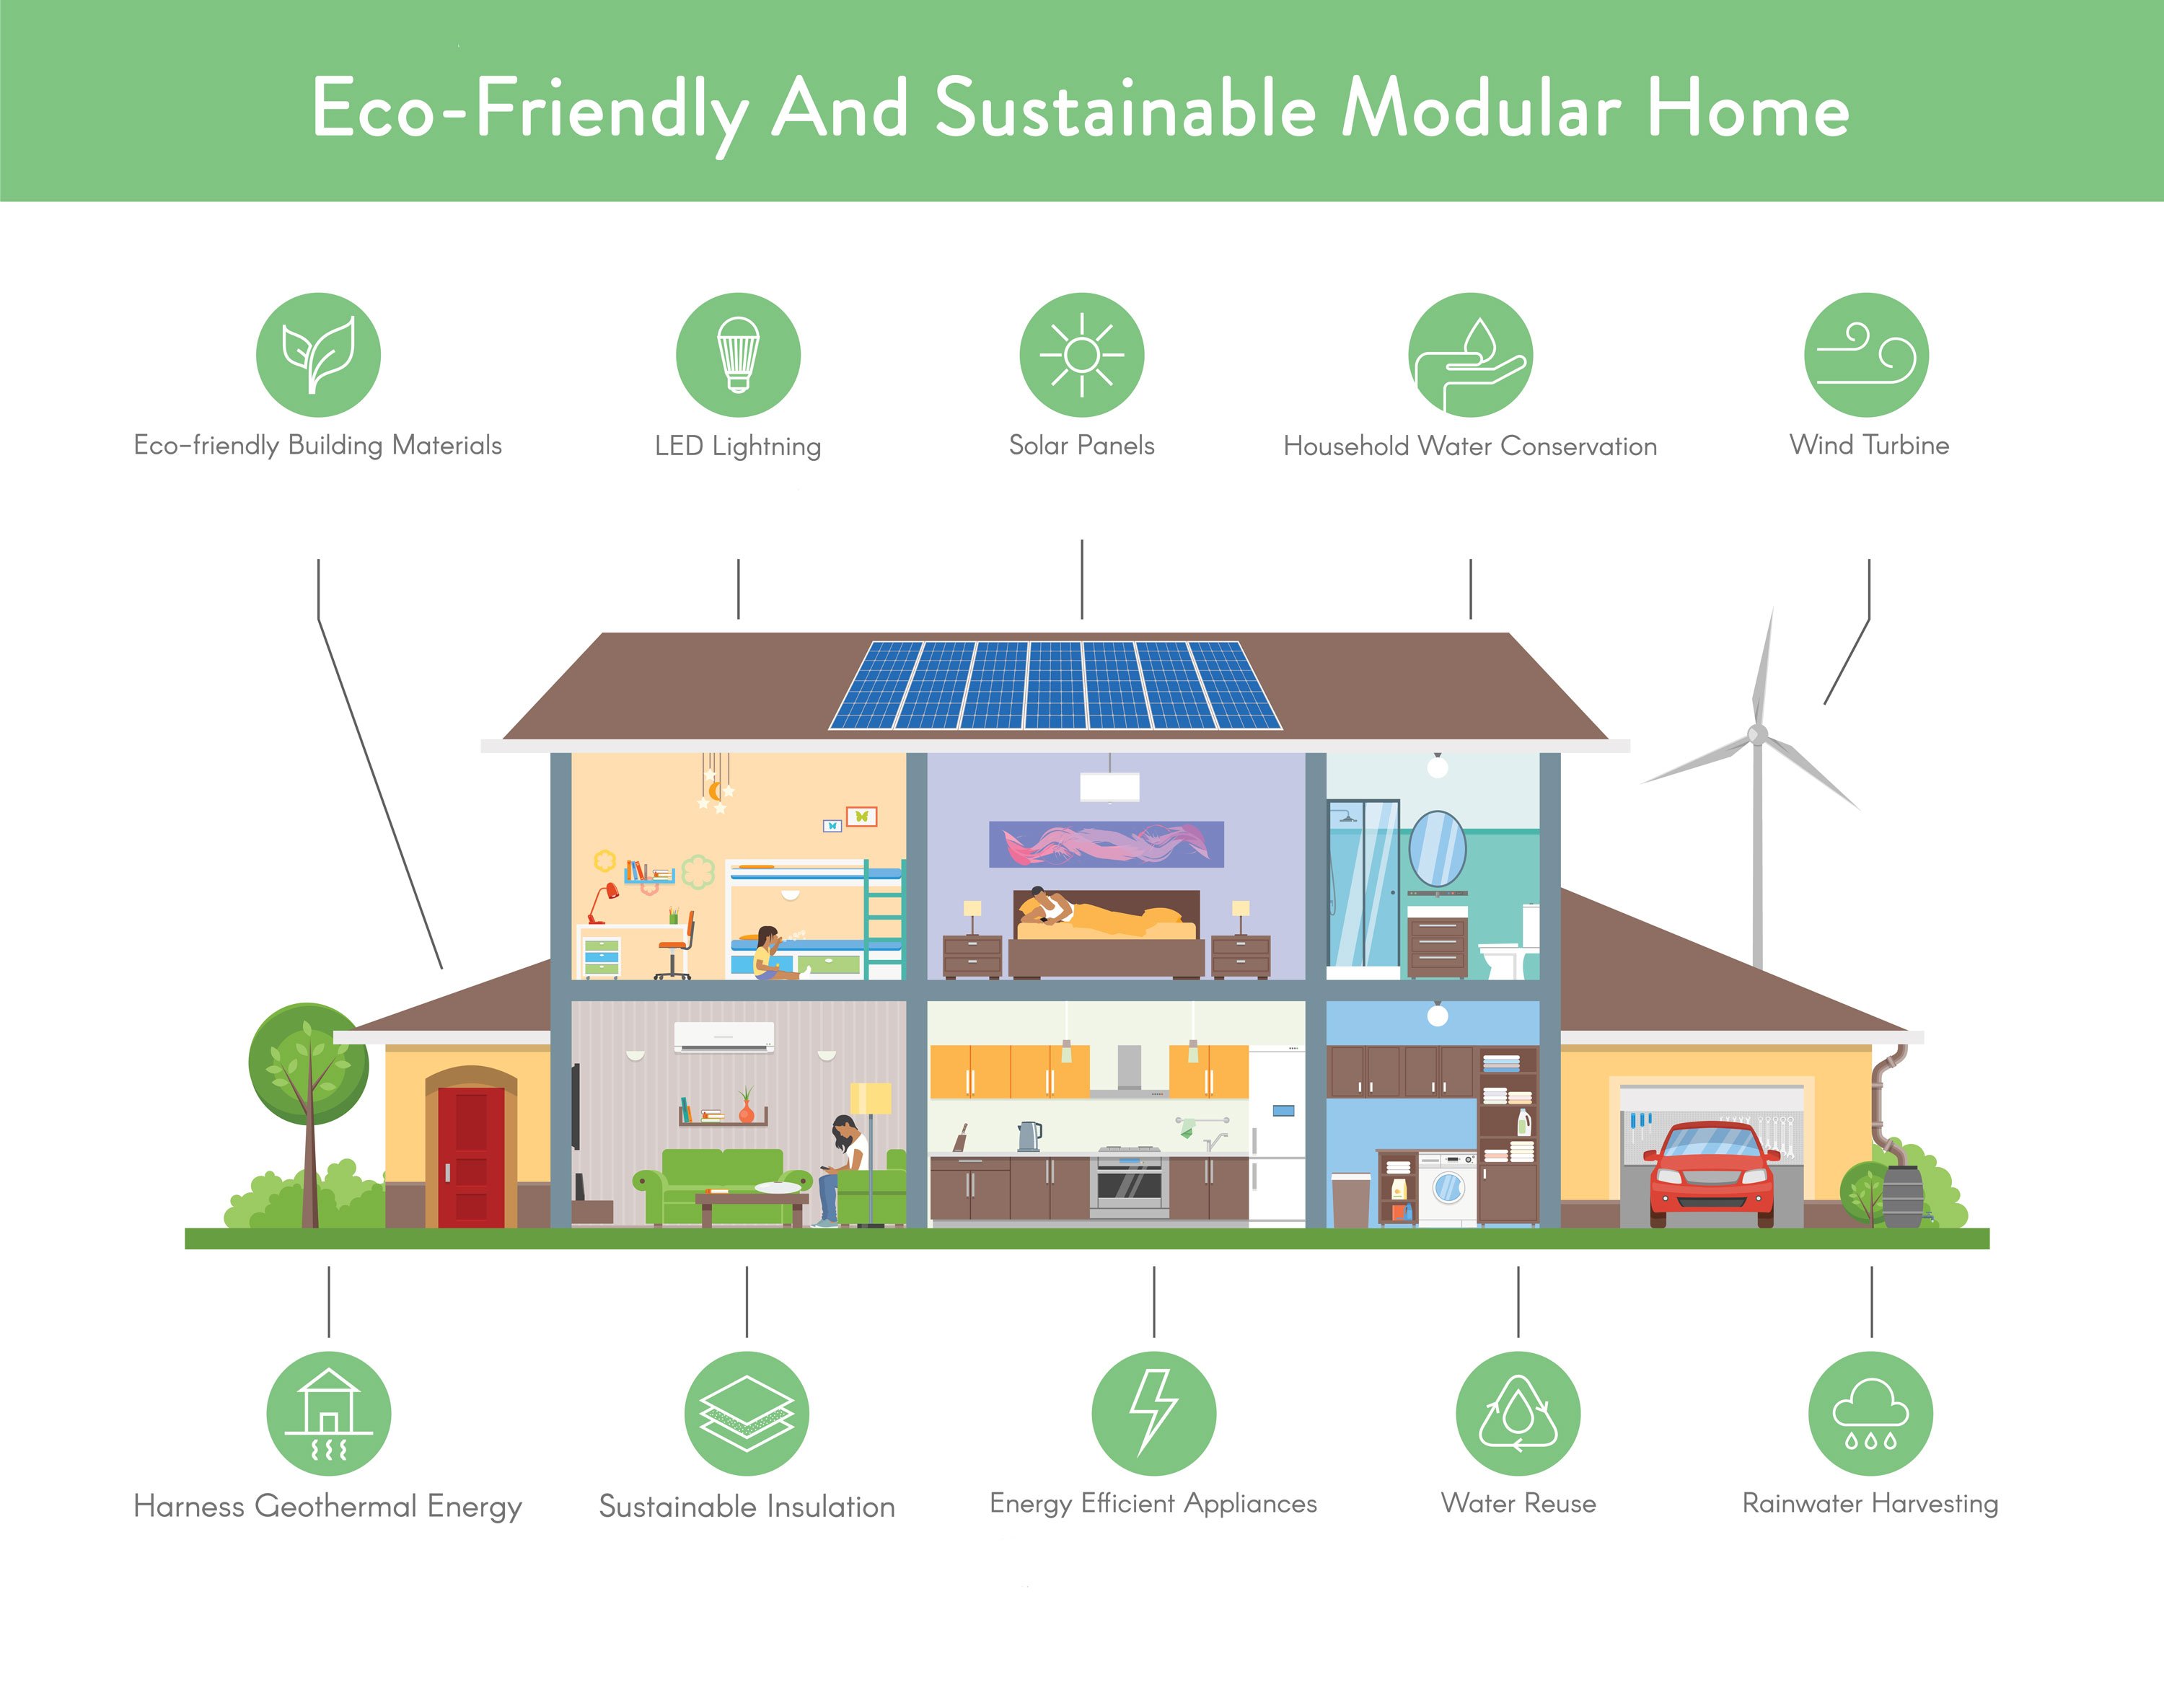 sustainable house essay